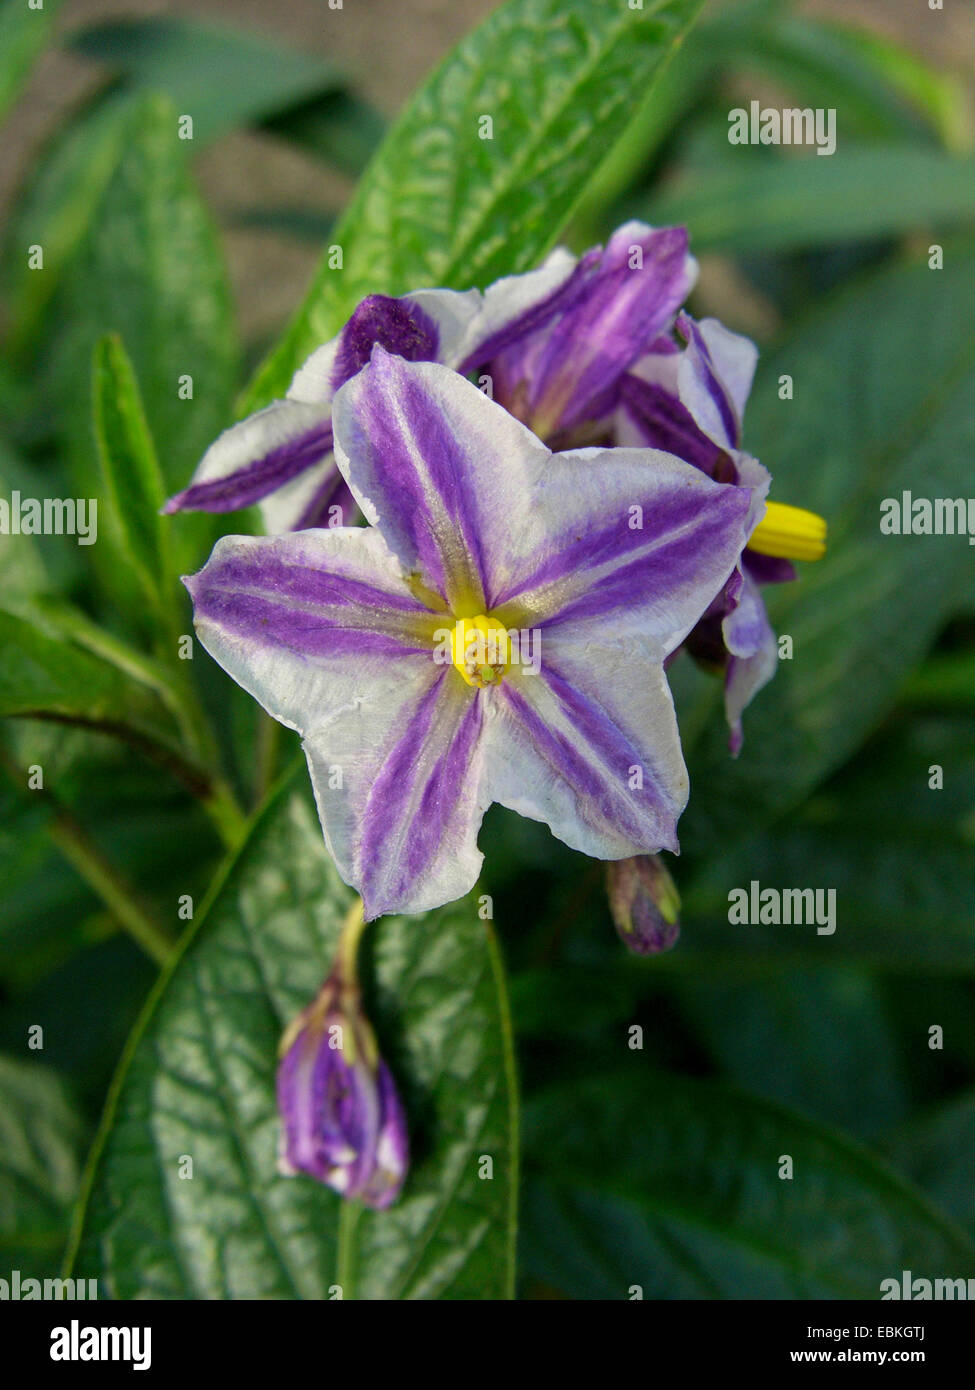 Pepino, Melon pear (Solanum muricatum), flower Stock Photo